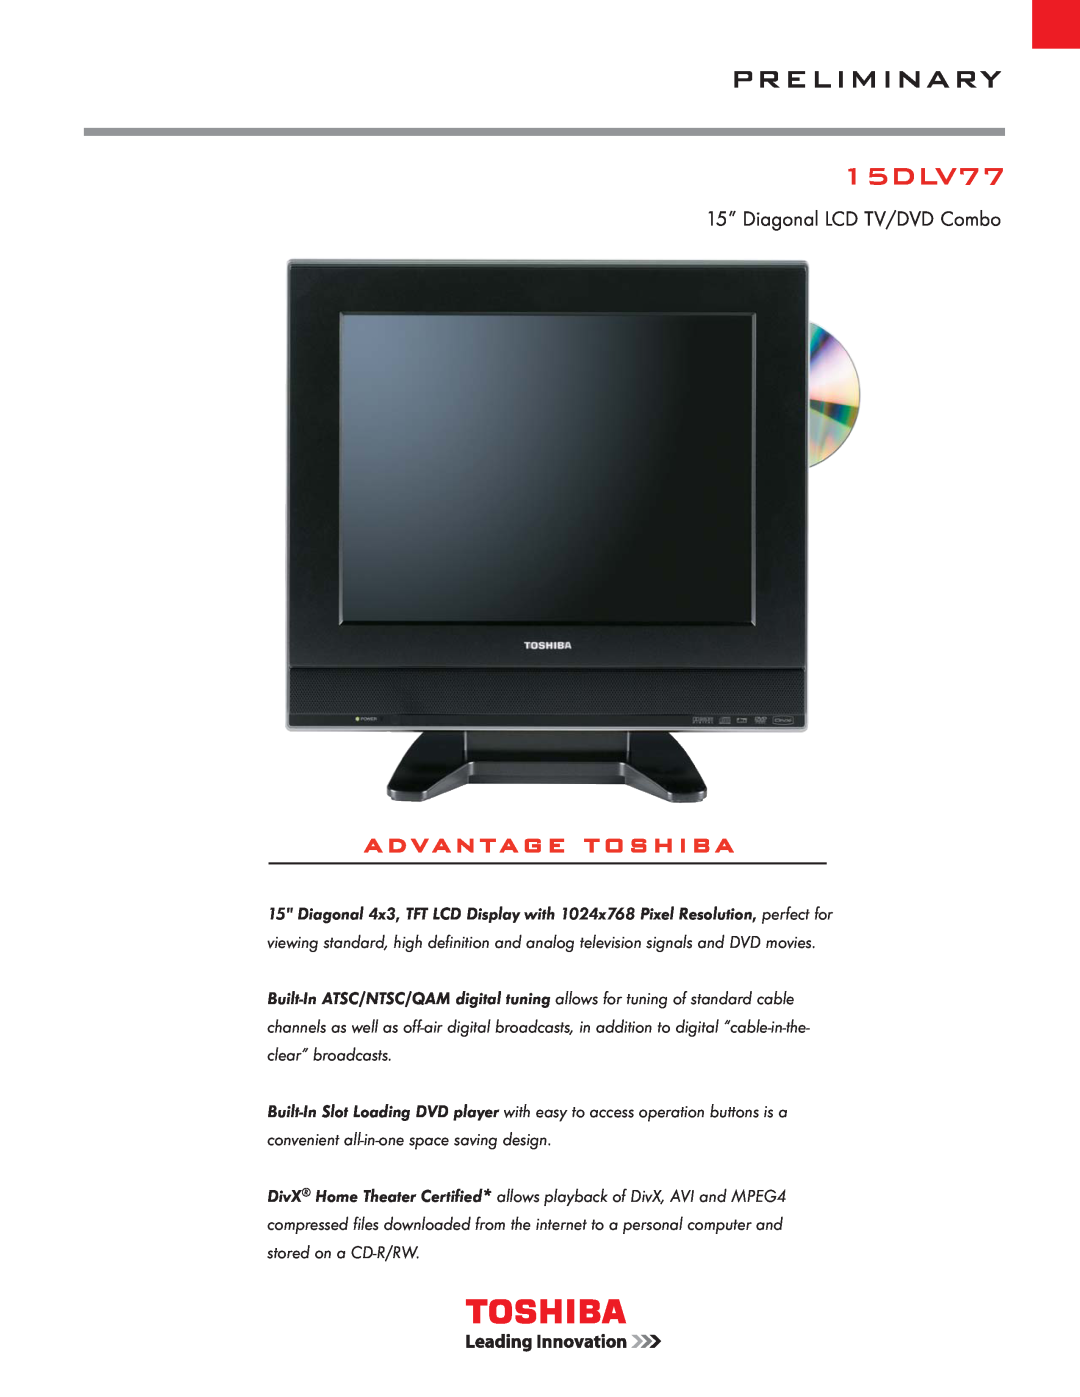 Toshiba 15DLV77 manual Preliminary, Advantage Toshiba, 15” Diagonal LCD TV/DVD Combo, clear” broadcasts 